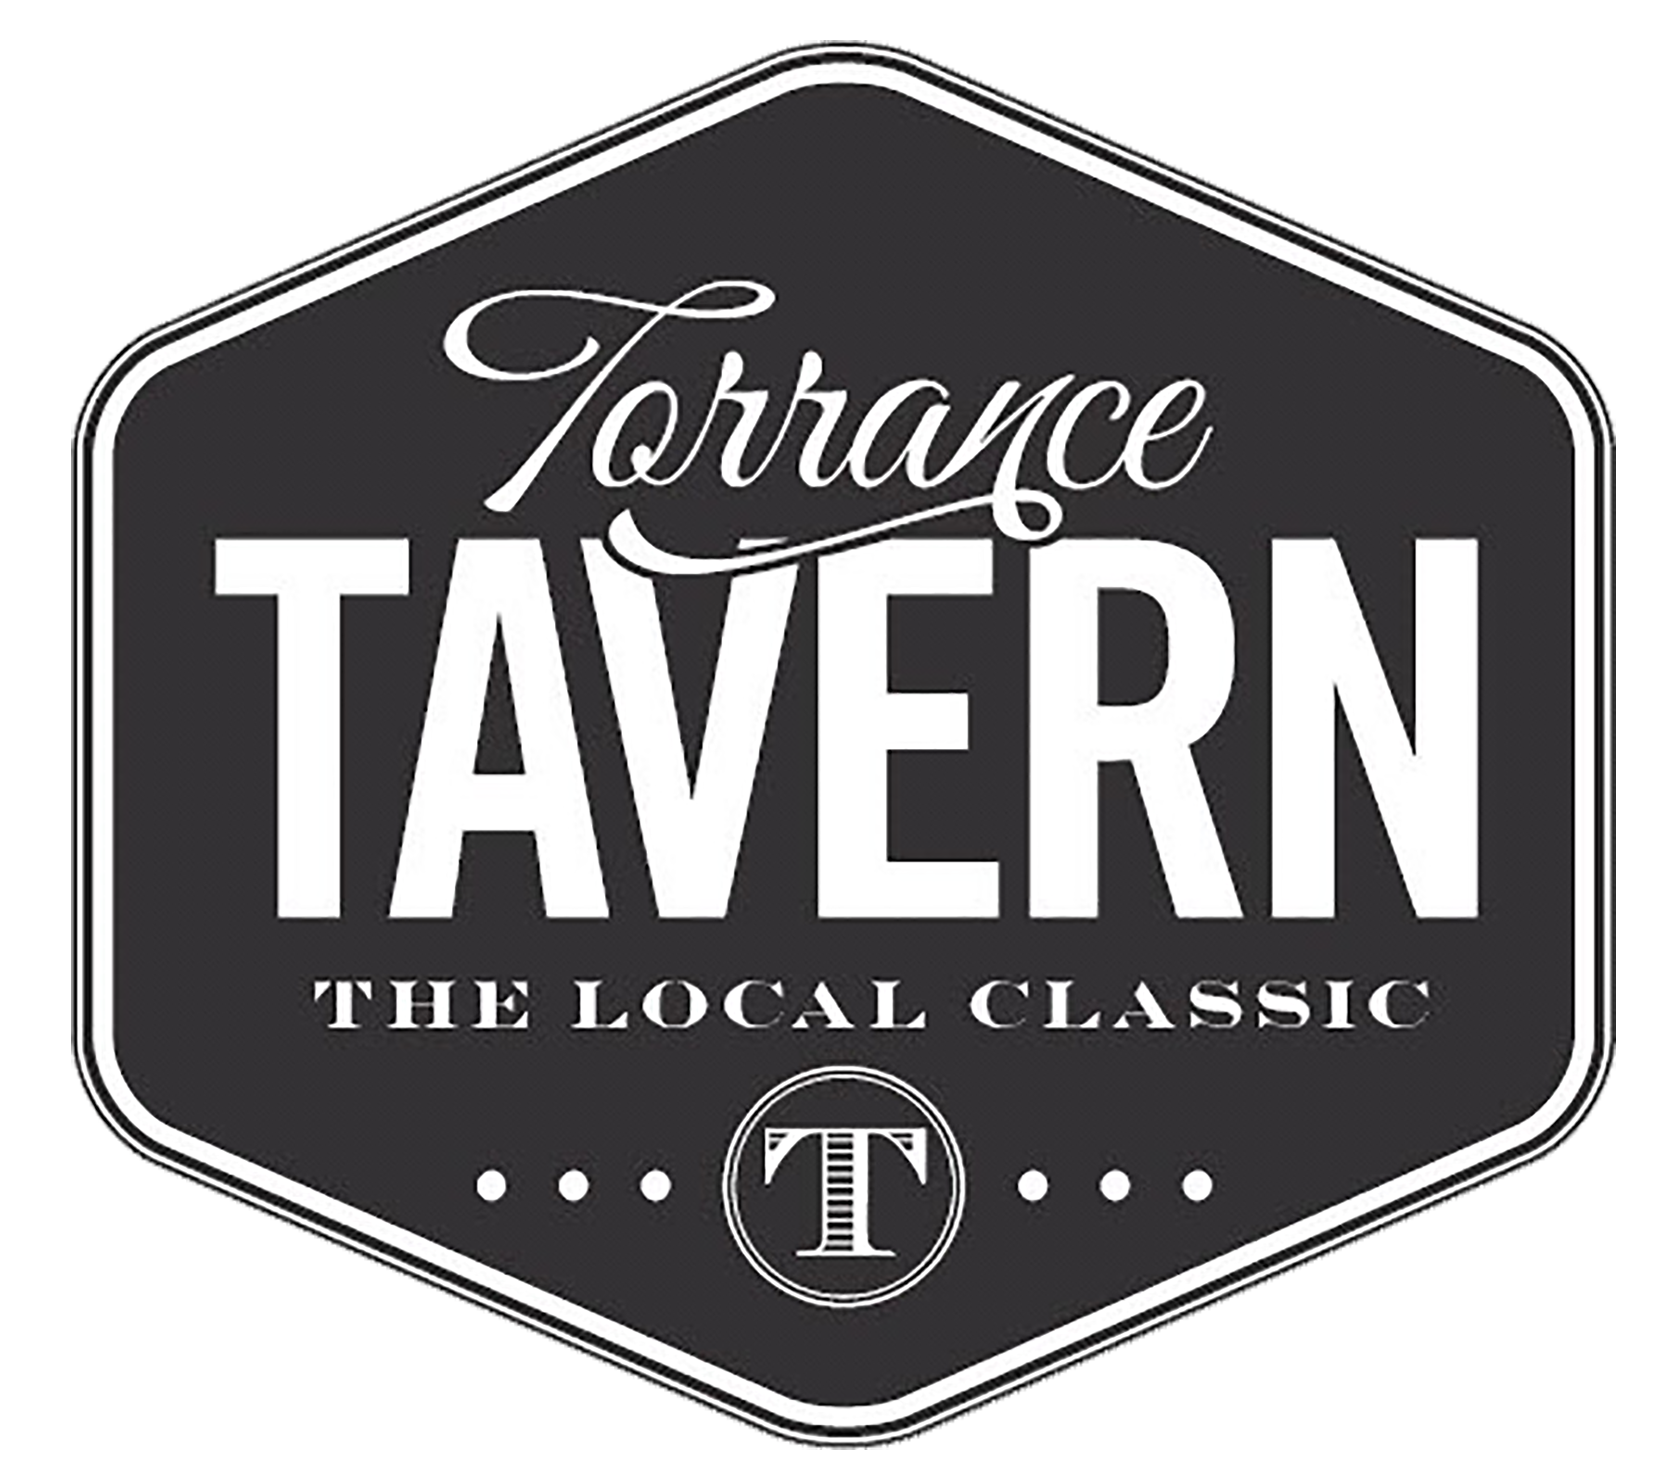 Torrance Tavern 22735 Hawthorne Blvd.